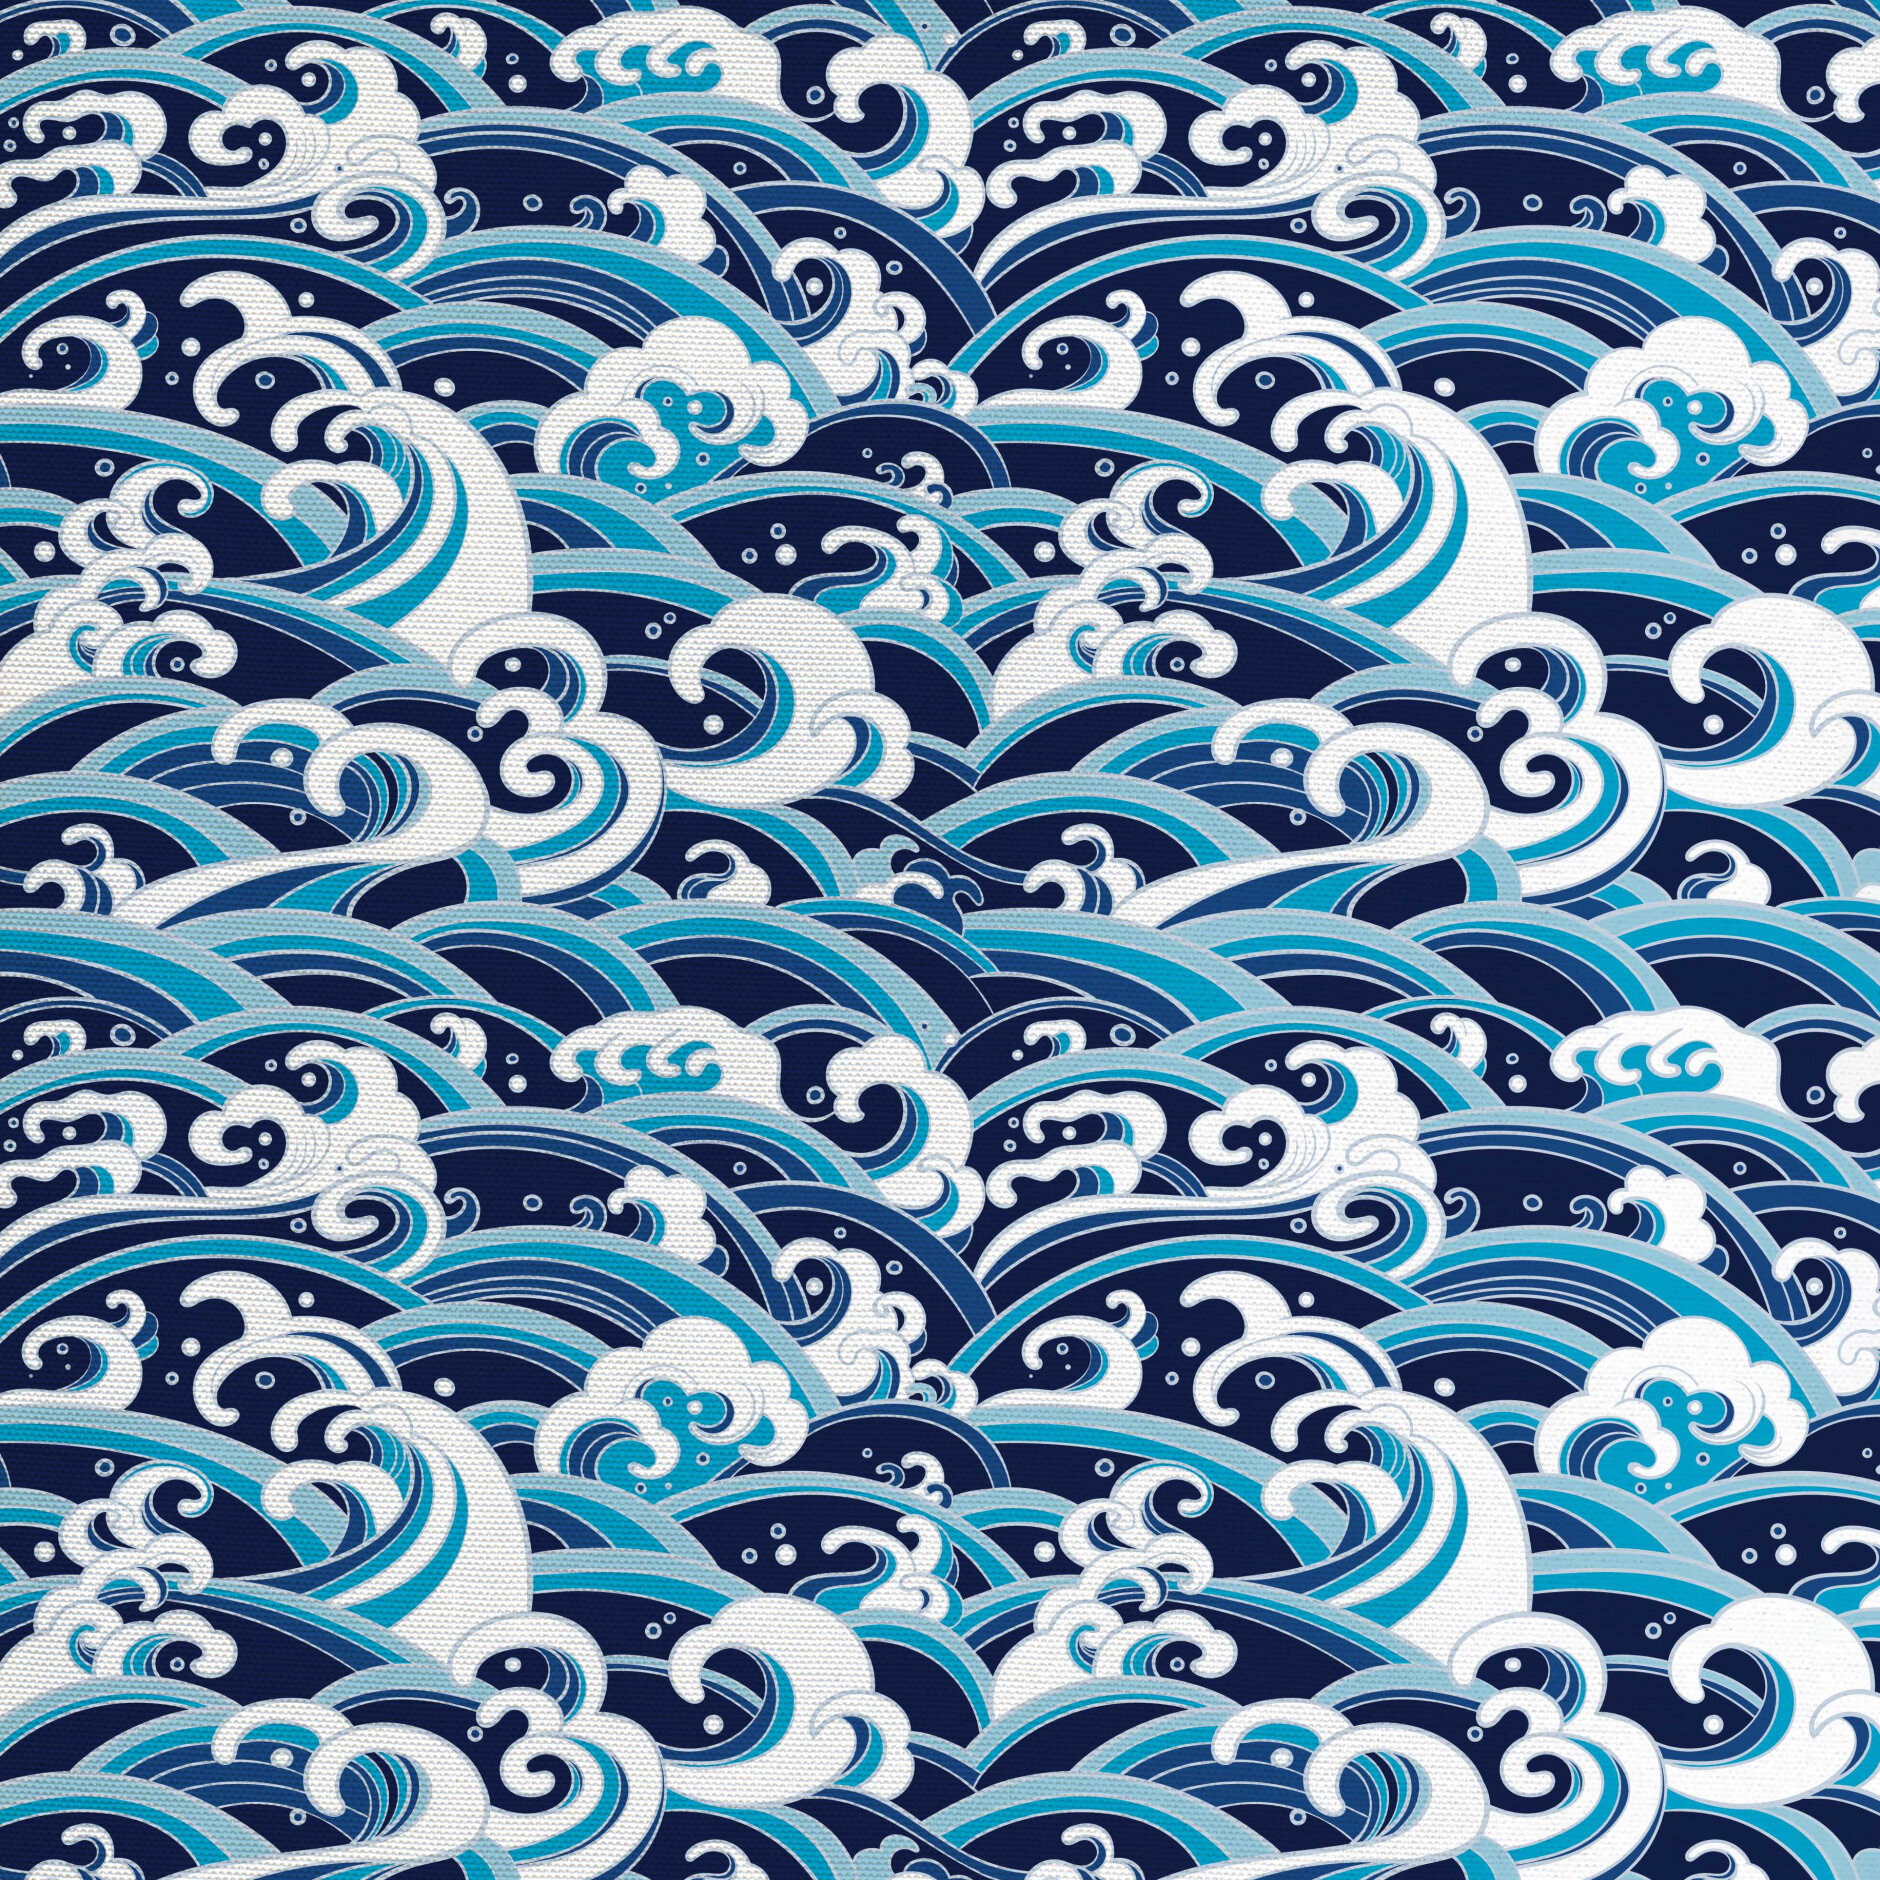 japanese wave print fabric - webwork360.com.